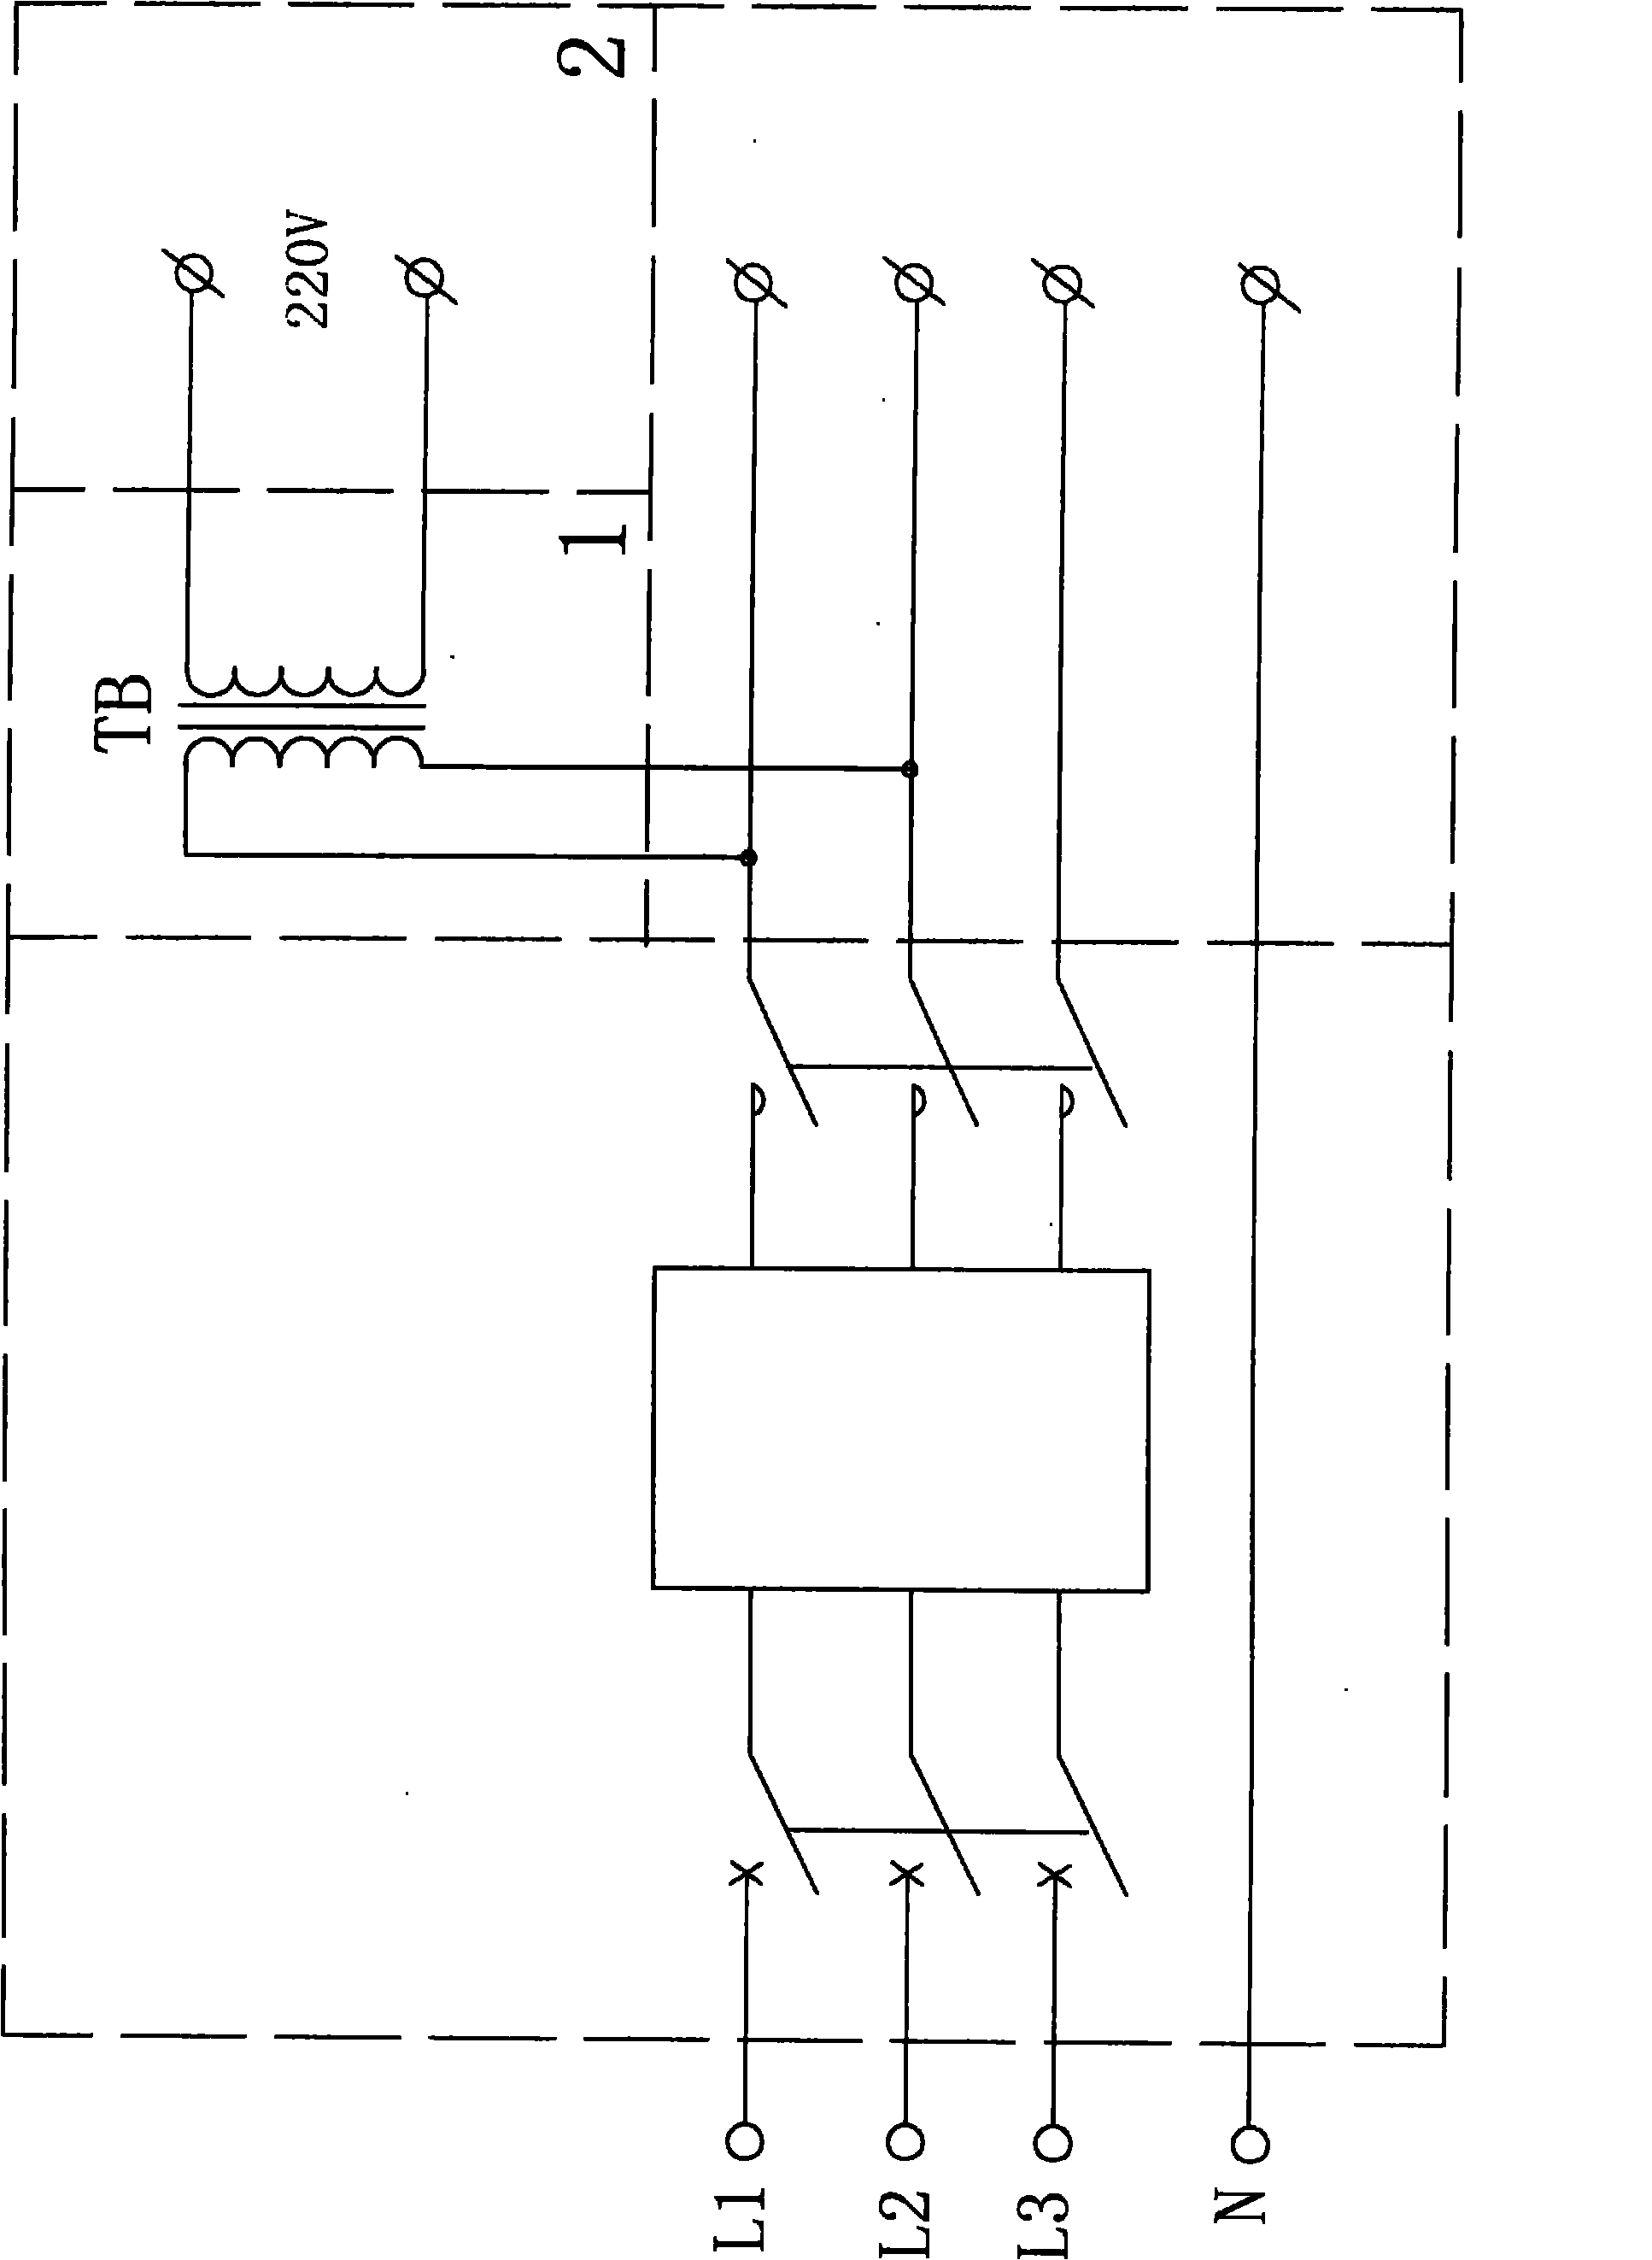 Output circuit of three-phase power voltage regulator